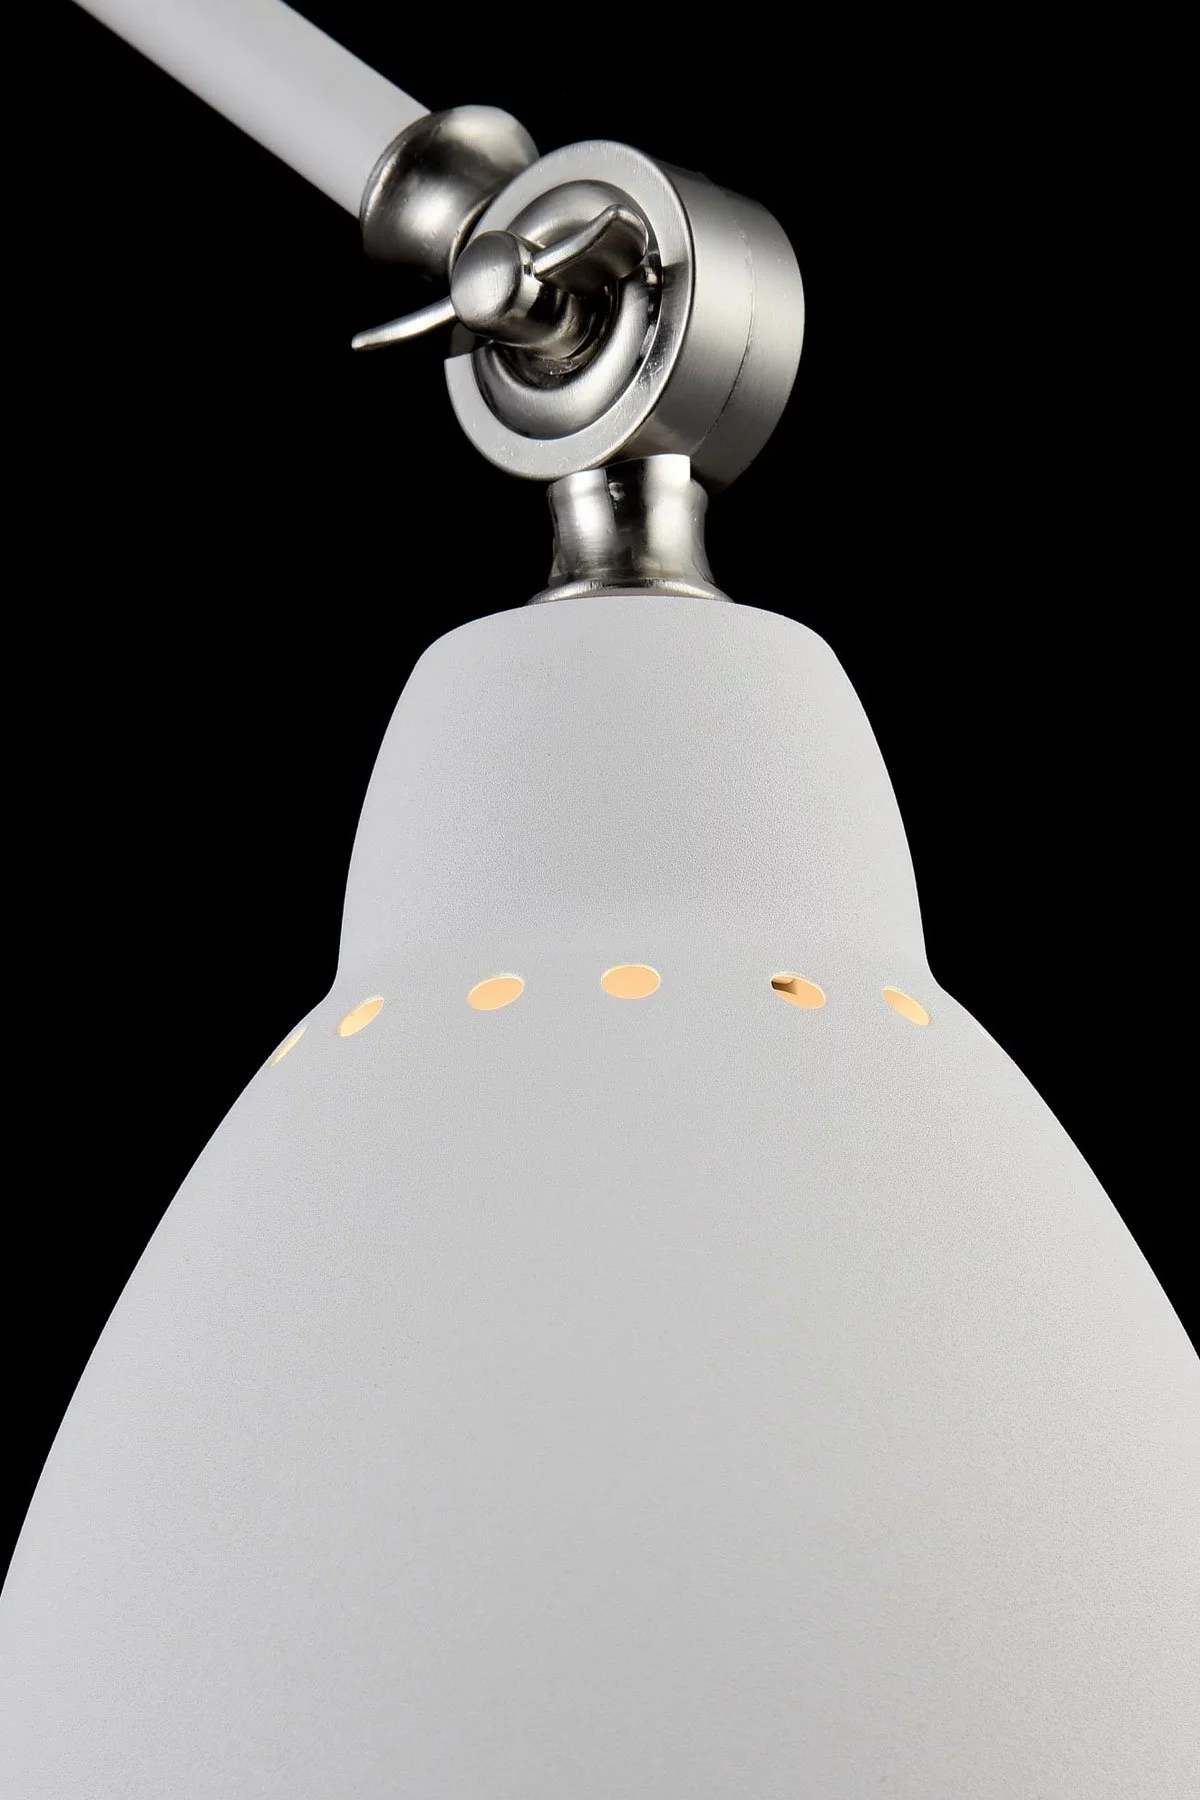   
                        Бра MAYTONI  (Германия) 99115    
                         в стиле Скандинавский.  
                        Тип источника света: светодиодная лампа, сменная.                                                 Цвета плафонов и подвесок: Белый.                         Материал: Металл.                          фото 6